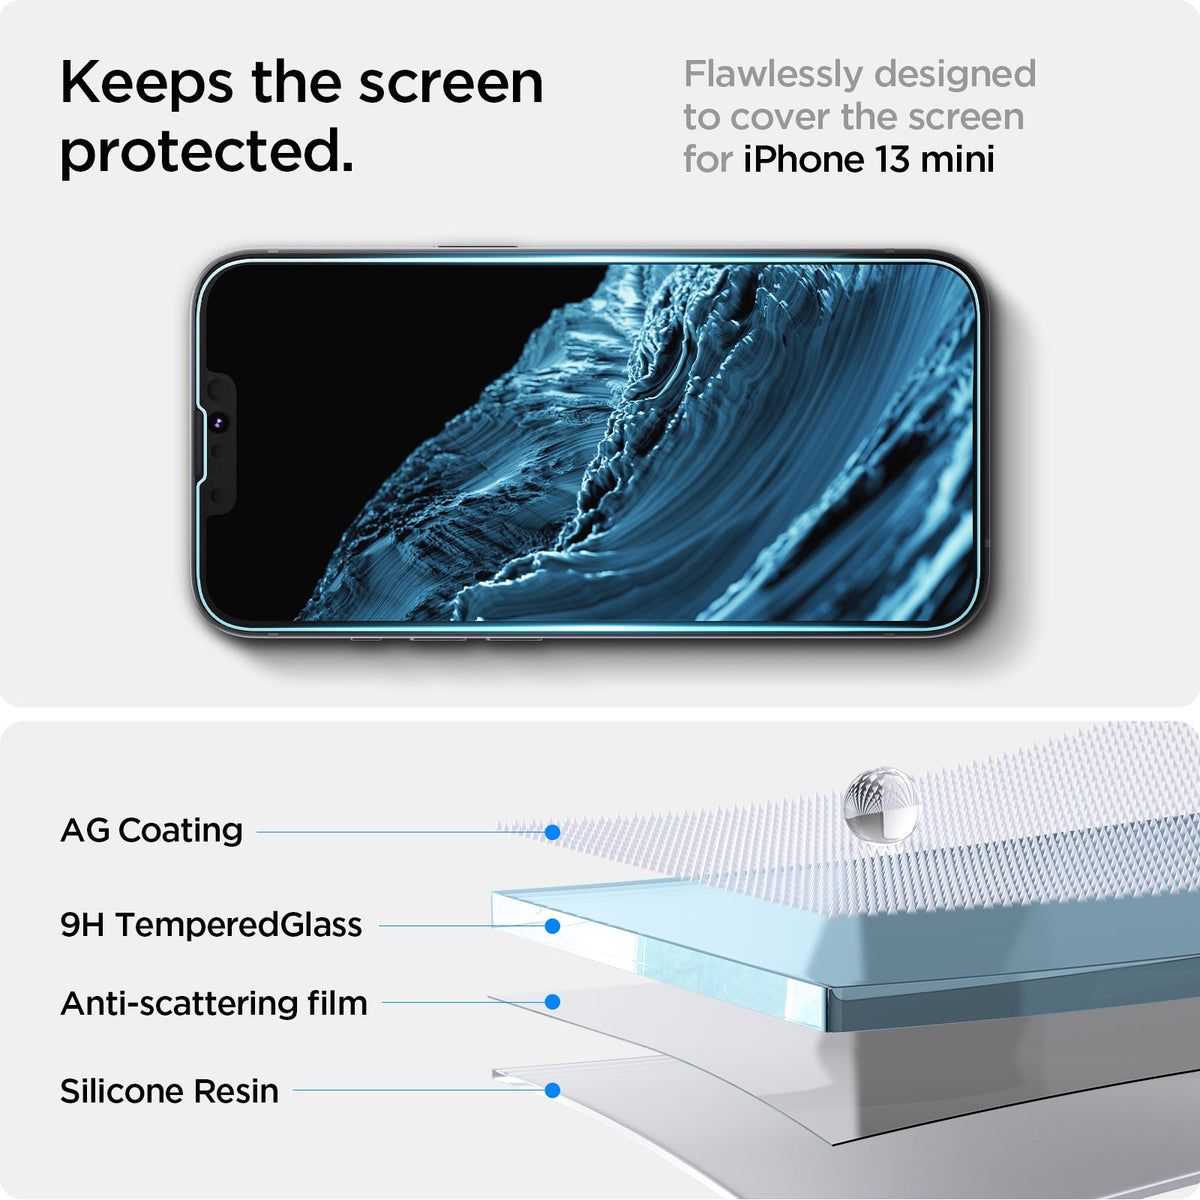 Spigen Glas.tR Ez Fit iPhone 13 Pro Max Tempered Glass Screen Protector - 9H